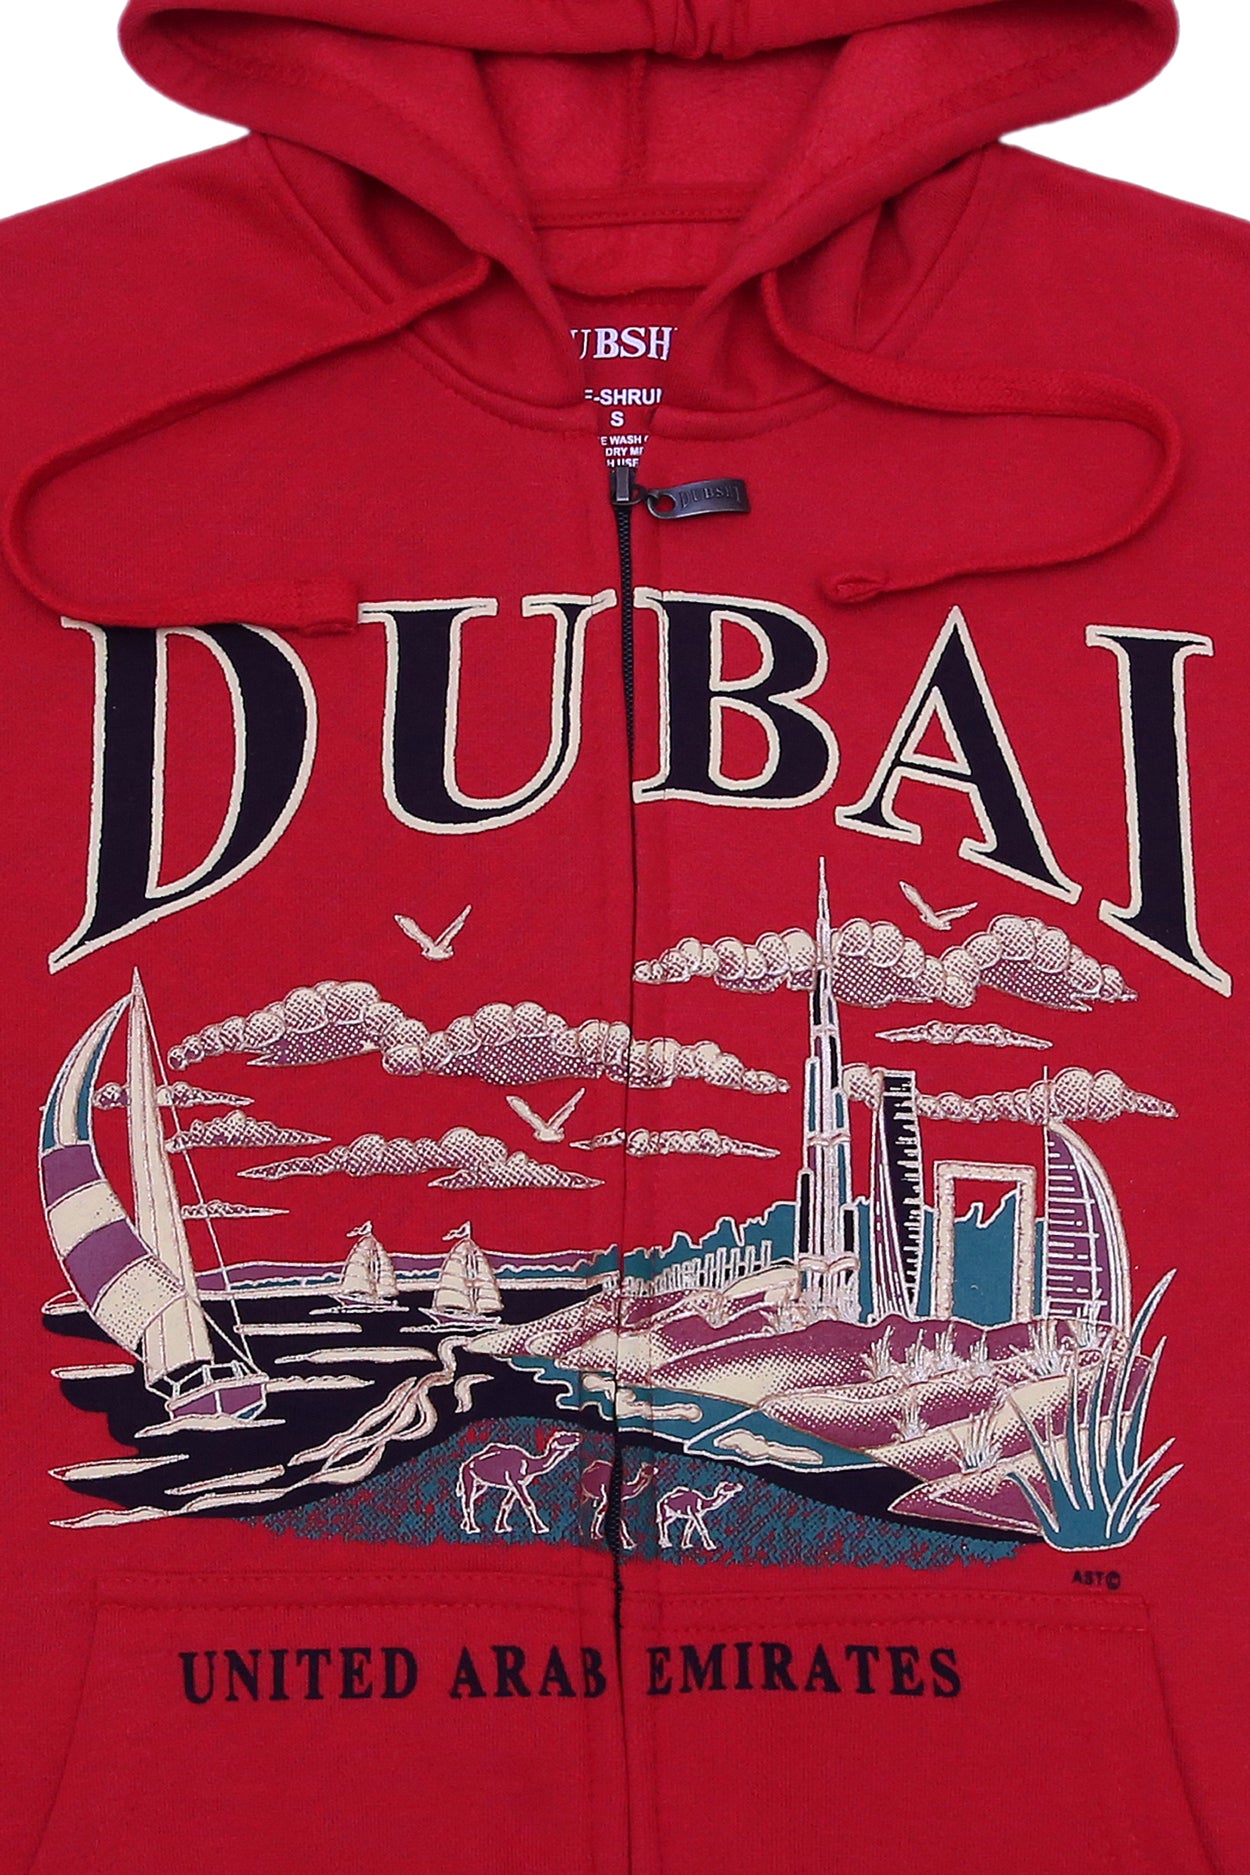 Unisex Dubai Jackets (188)